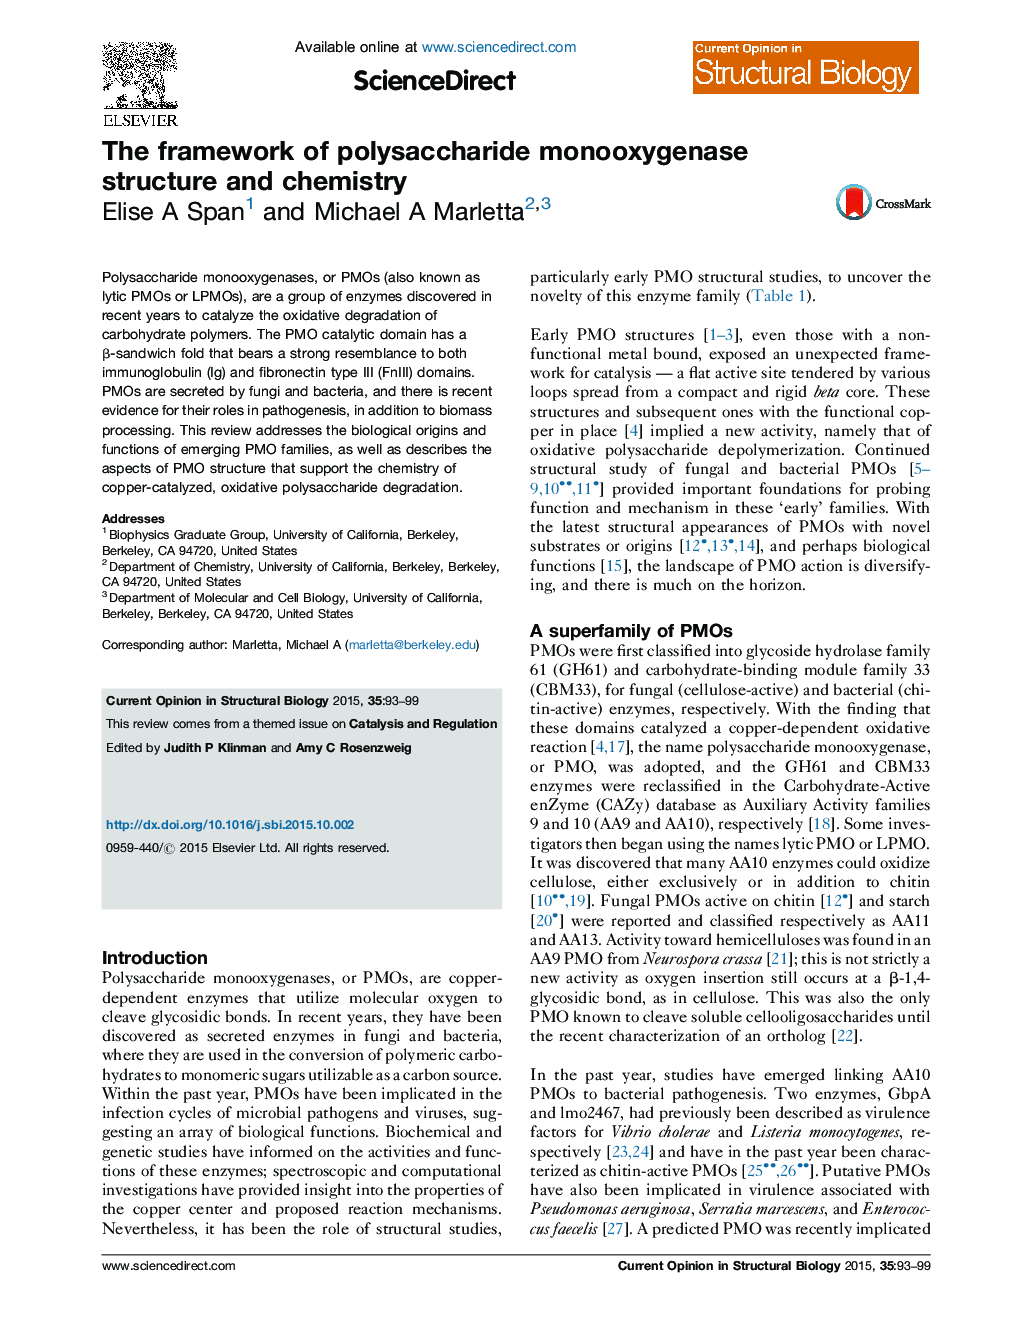 The framework of polysaccharide monooxygenase structure and chemistry